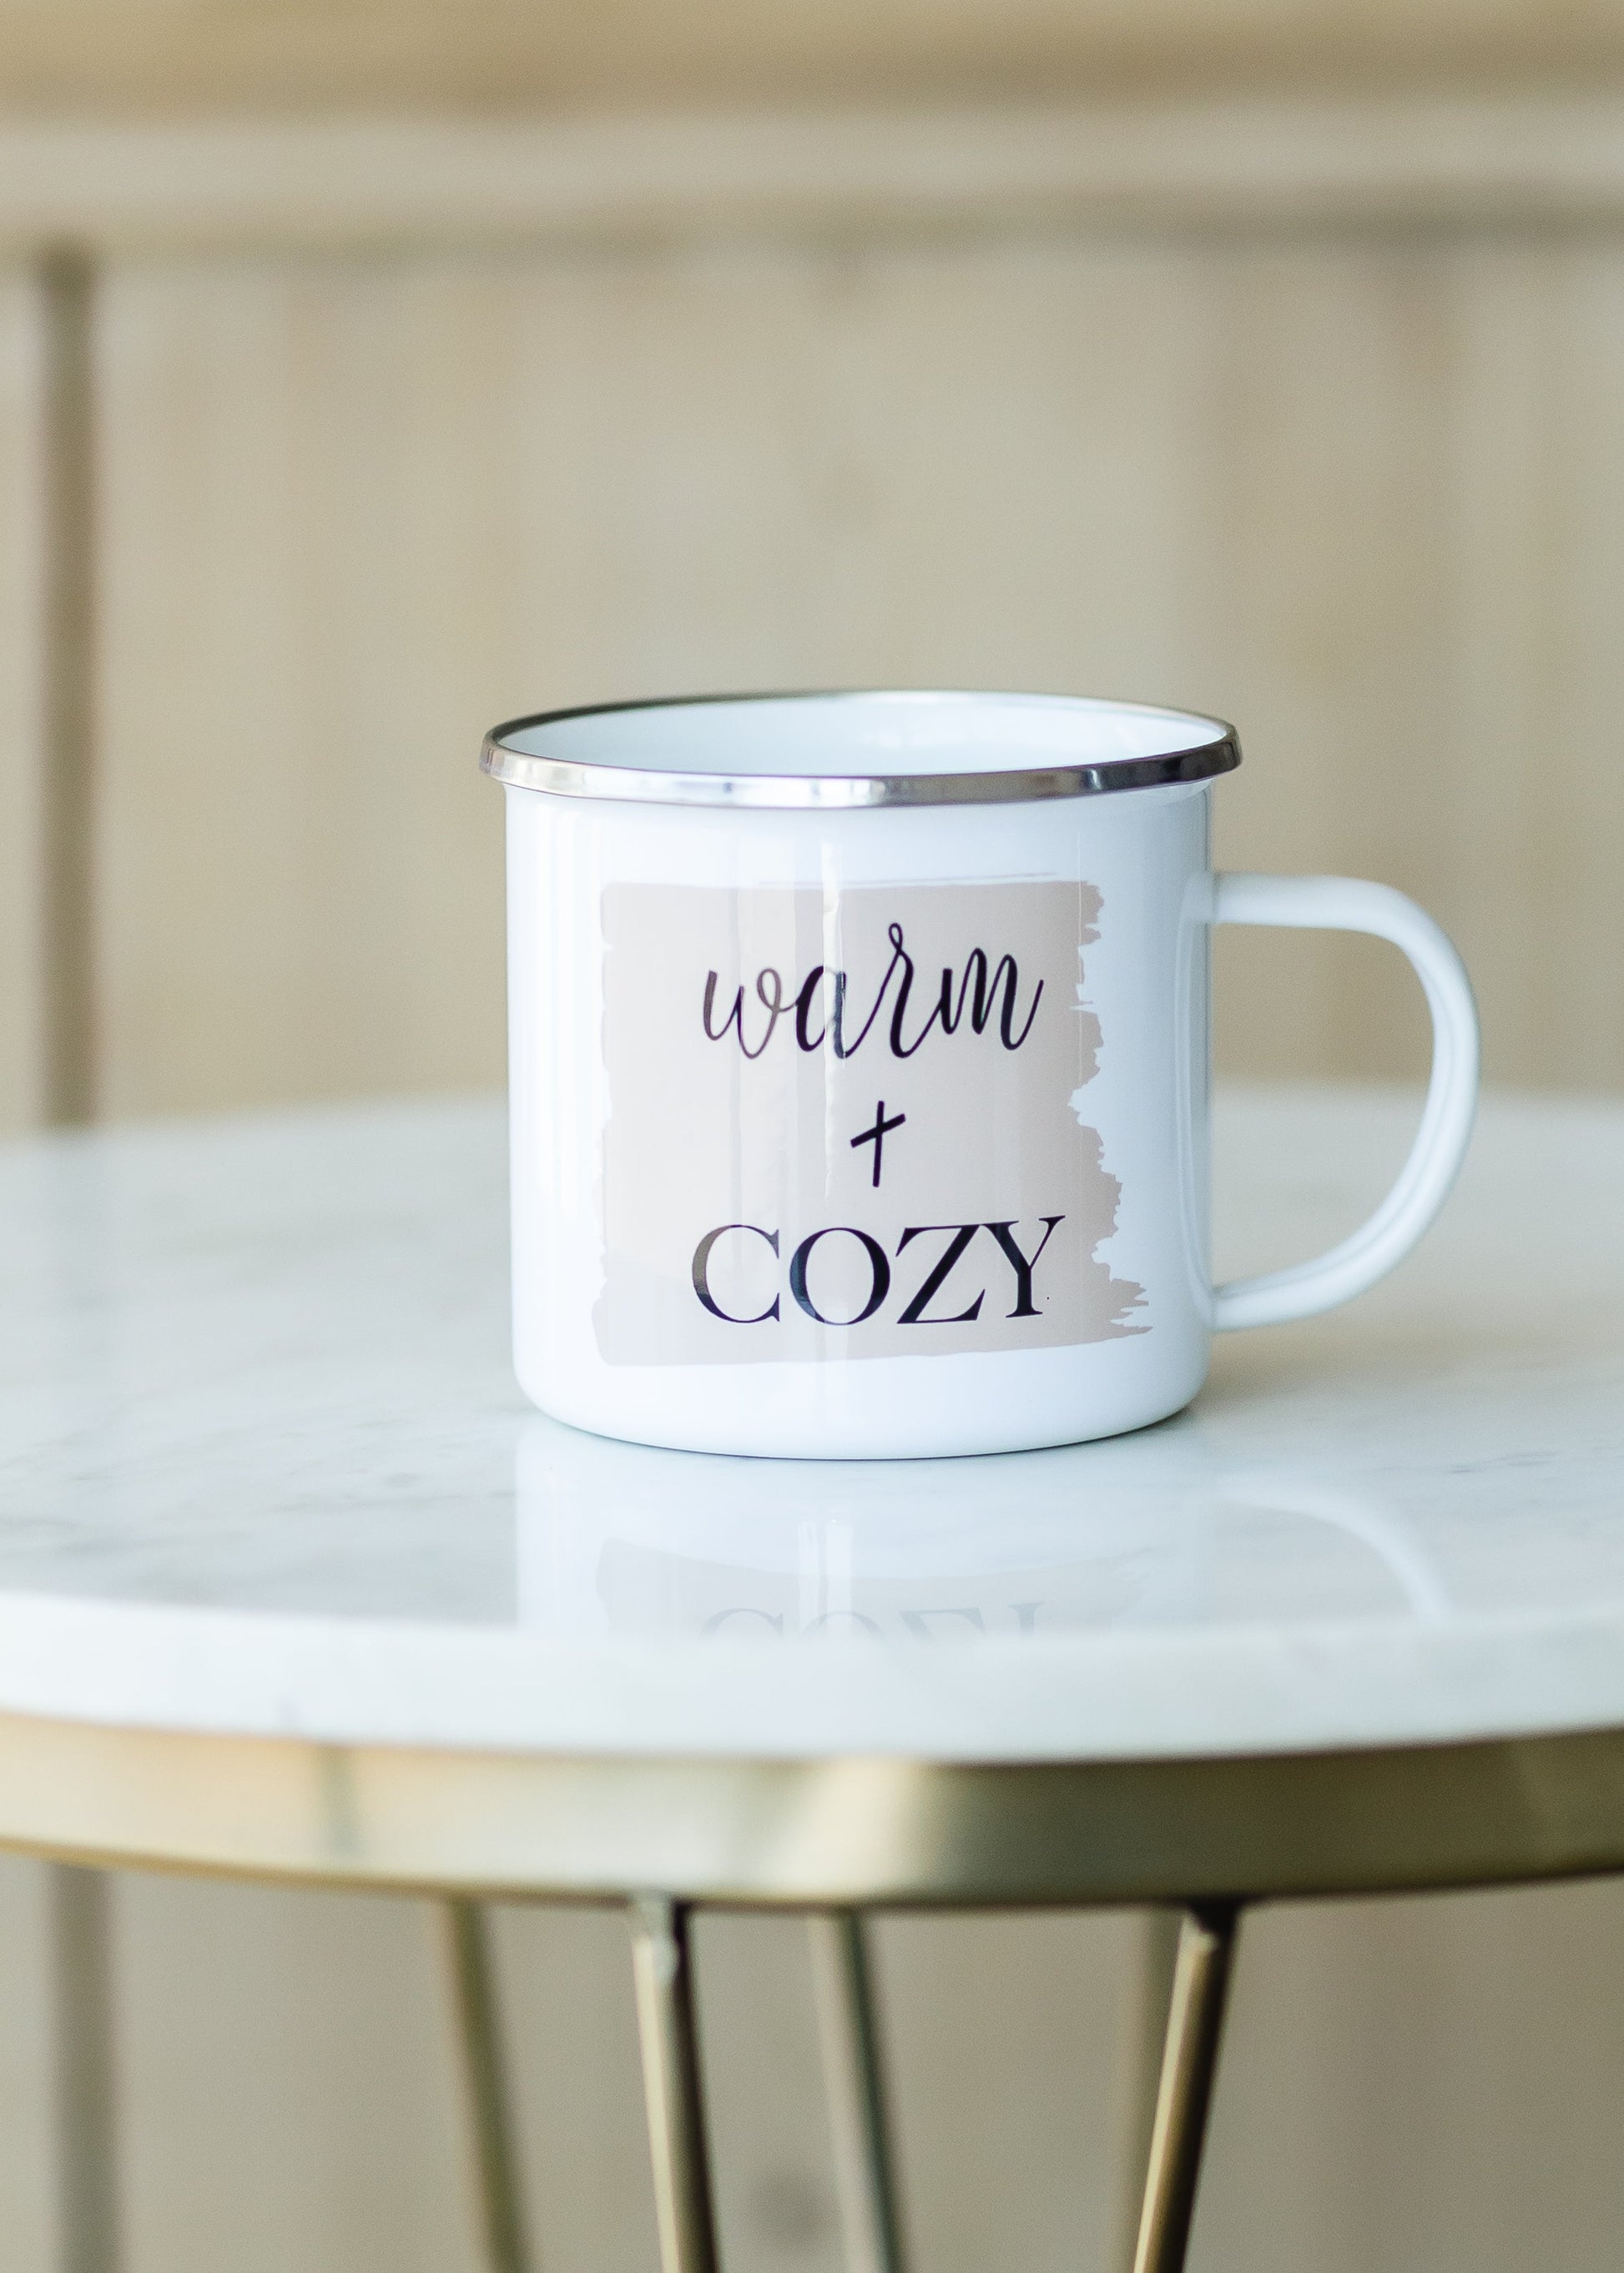 Warm + Cozy Coffee Mug - FINAL SALE Accessories